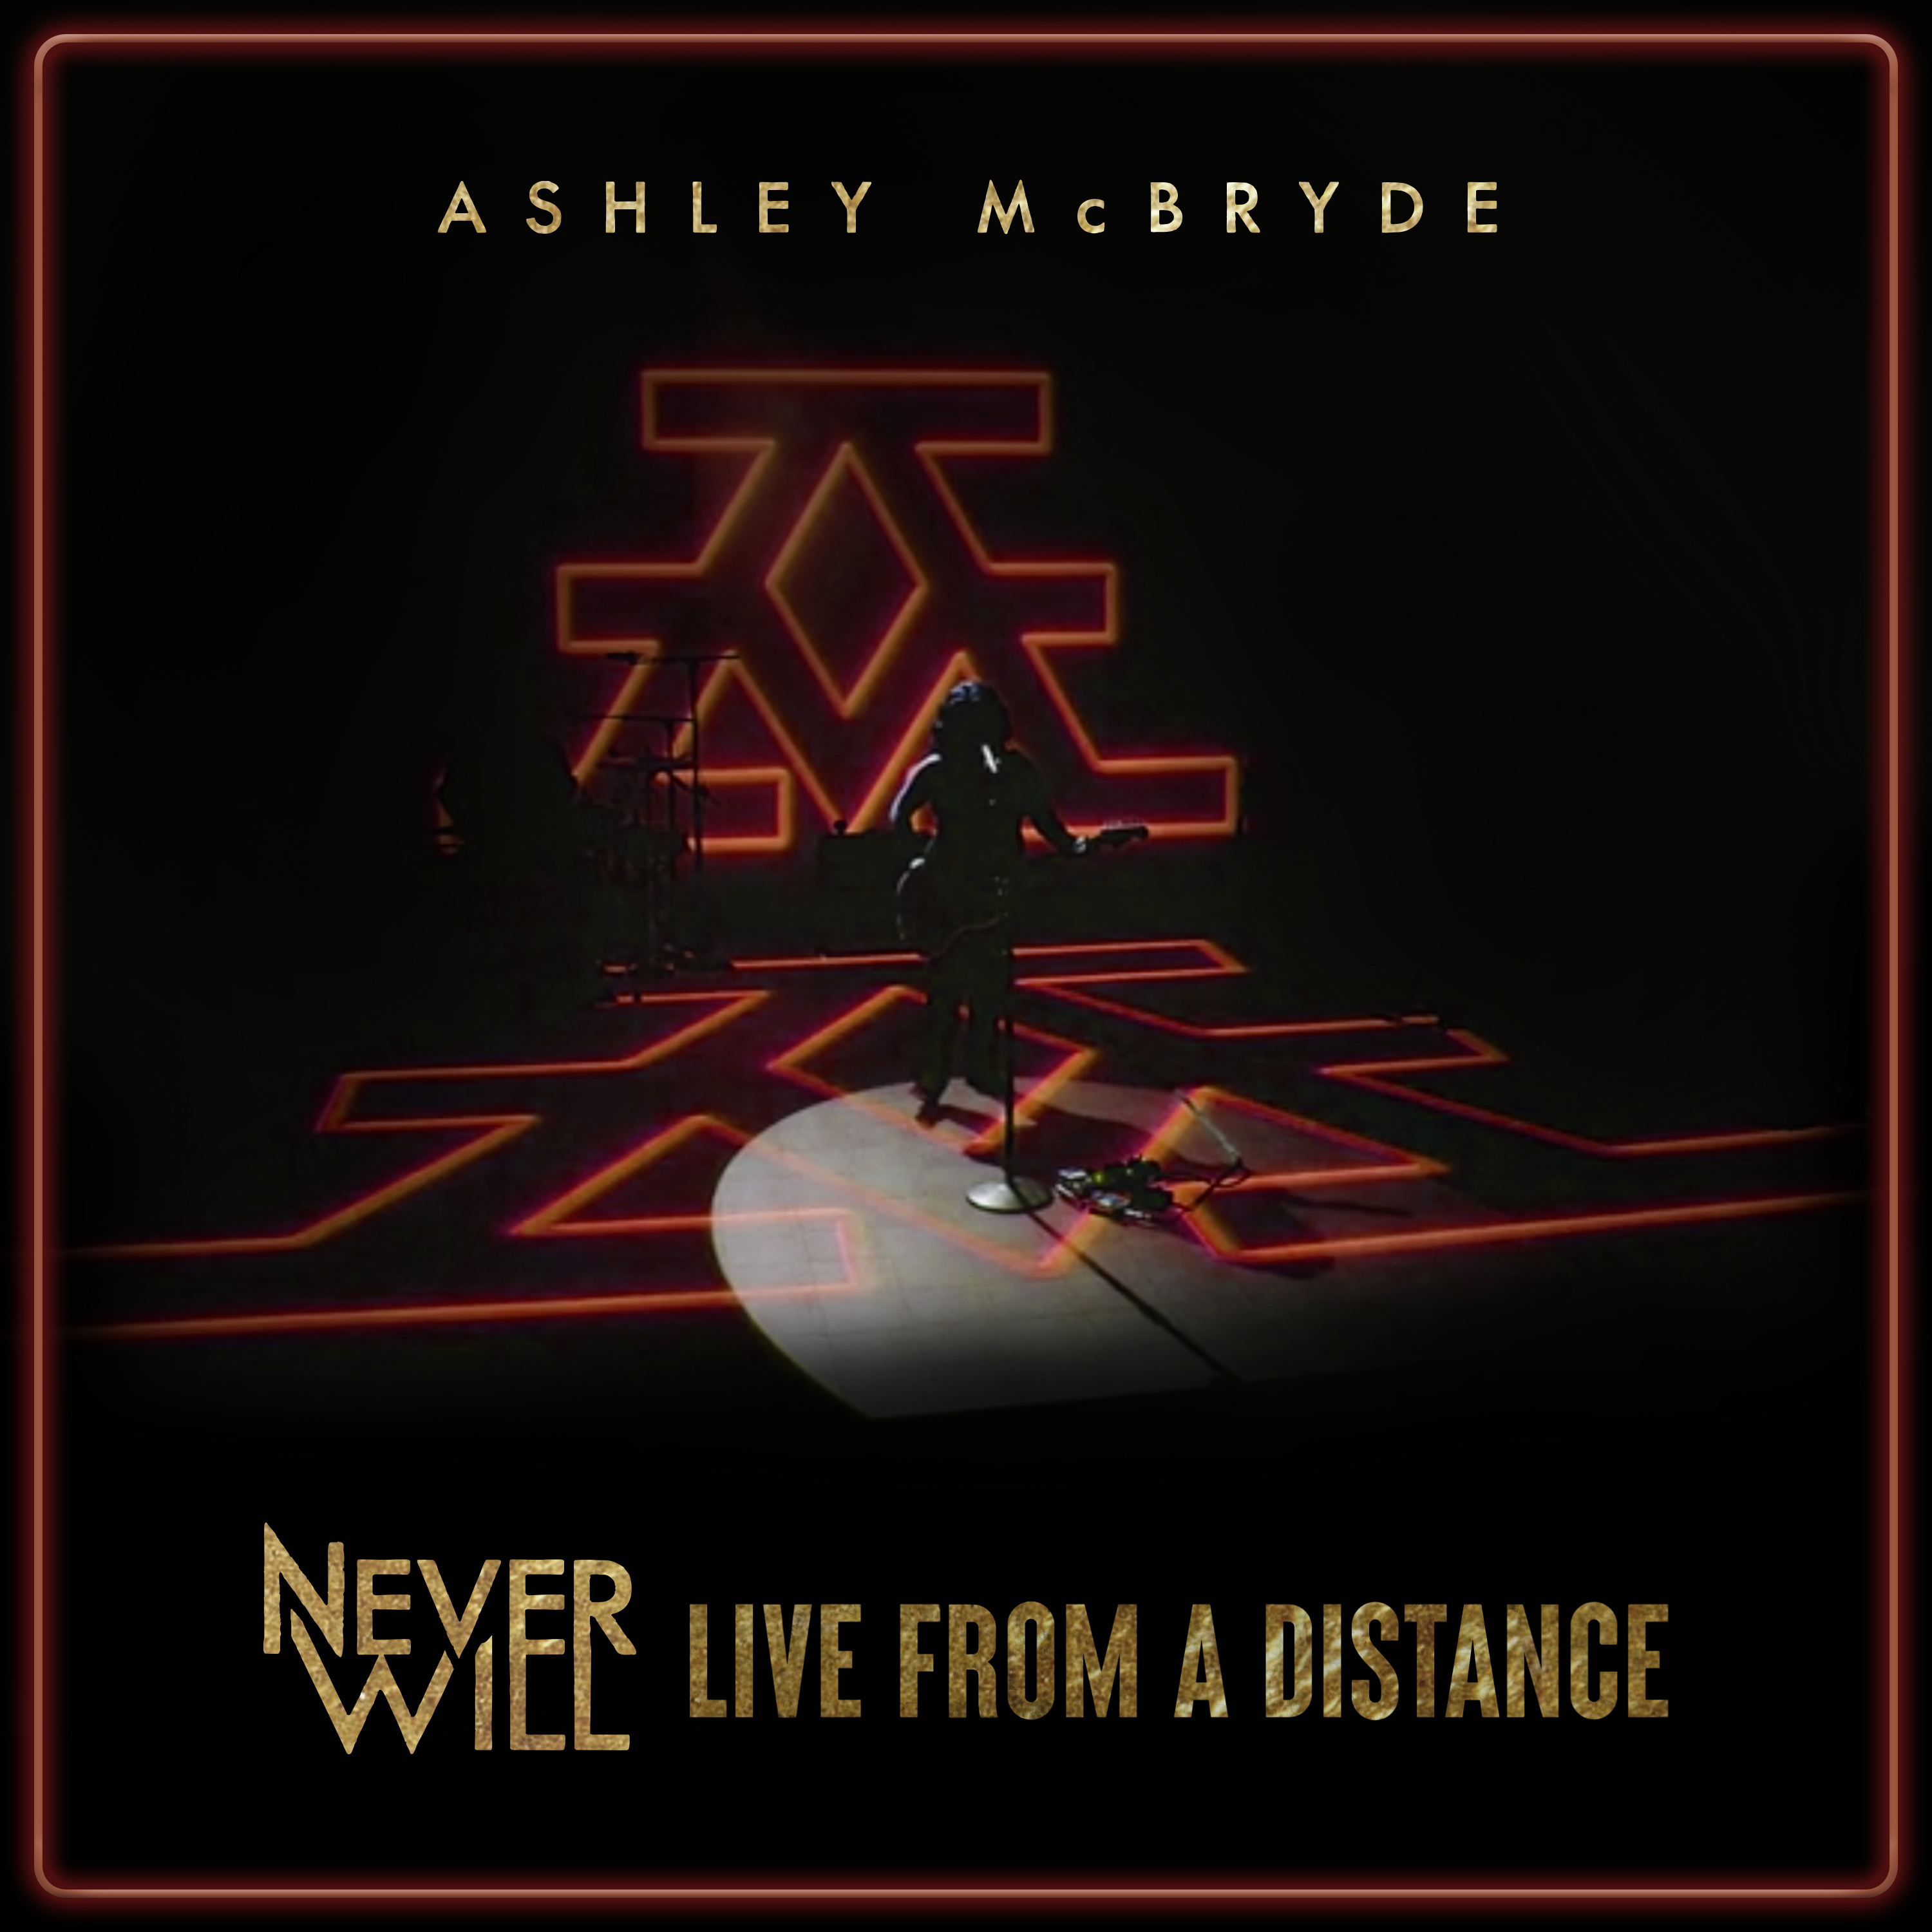 ASHLEY McBRYDE PREMIERES LIVE VERSION OF CURRENT SINGLE “MARTHA DIVINE” ON CMT, CMT MUSIC AND CMT.COM